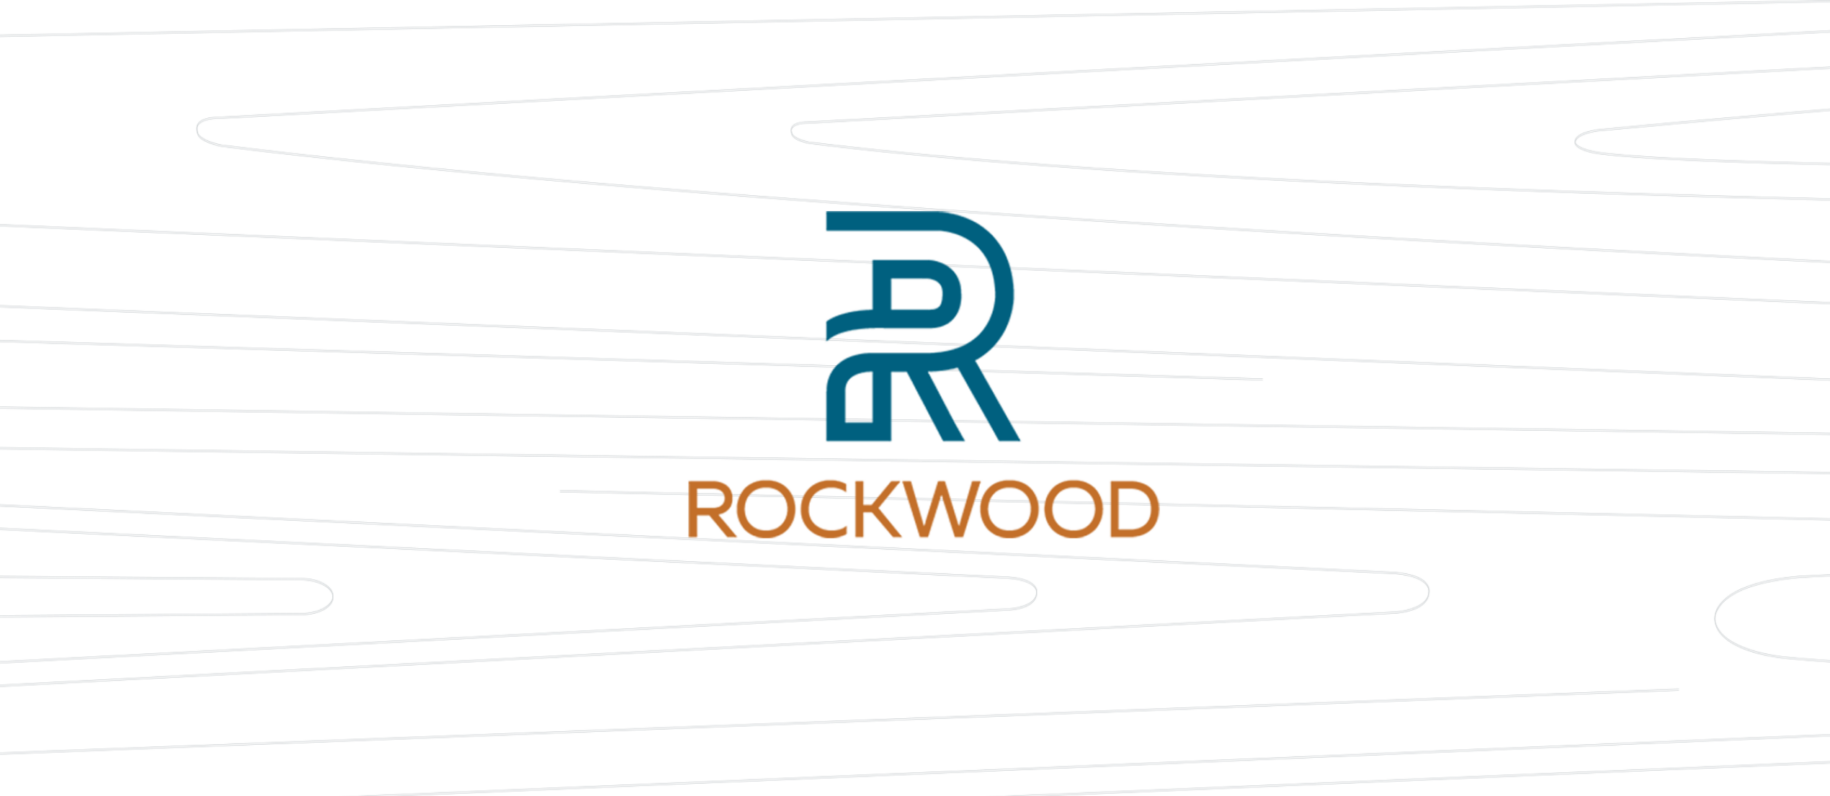 Rockwood final logo